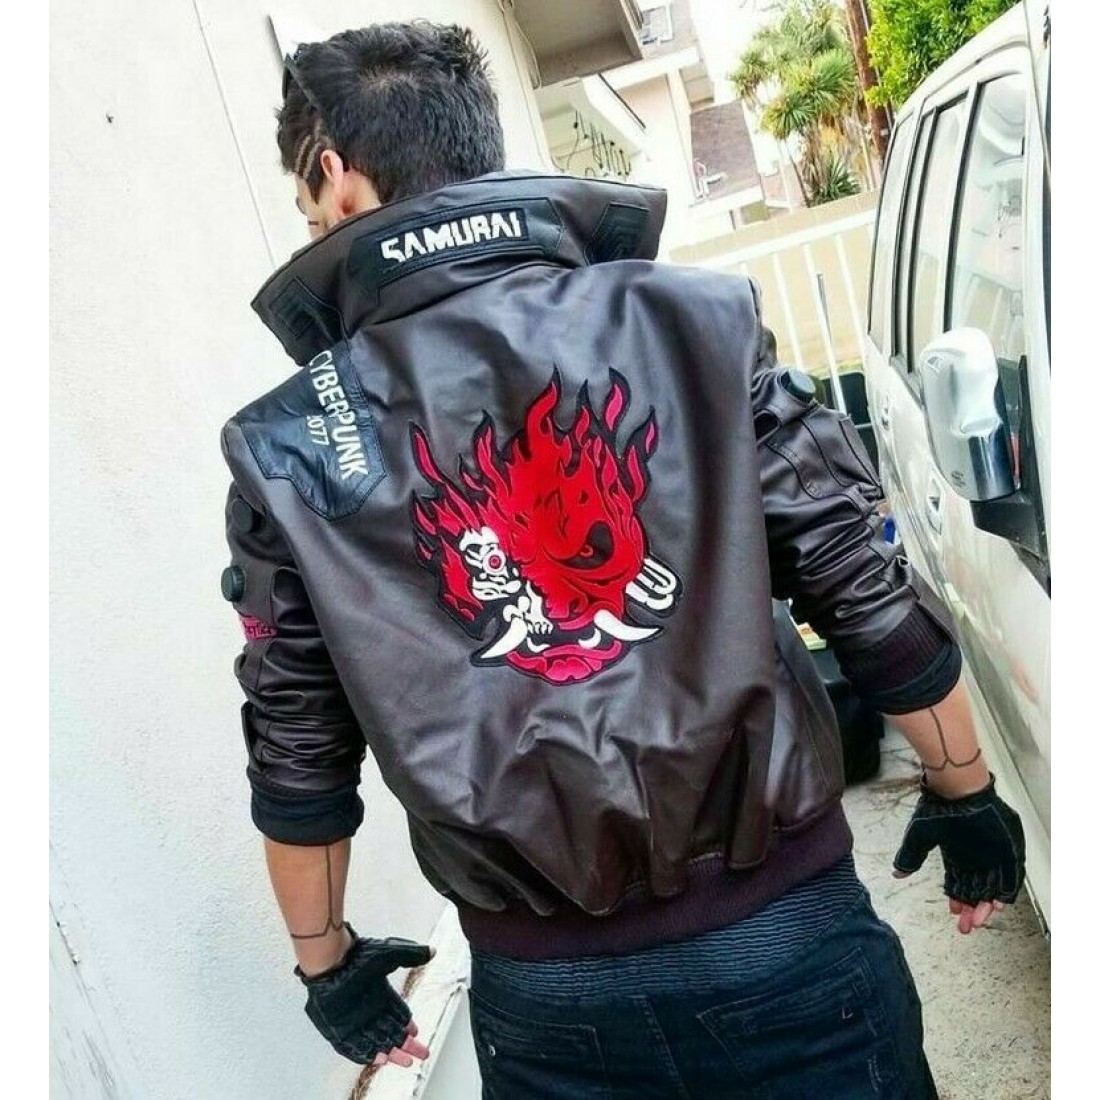 Samurai jacket cyberpunk фото 16